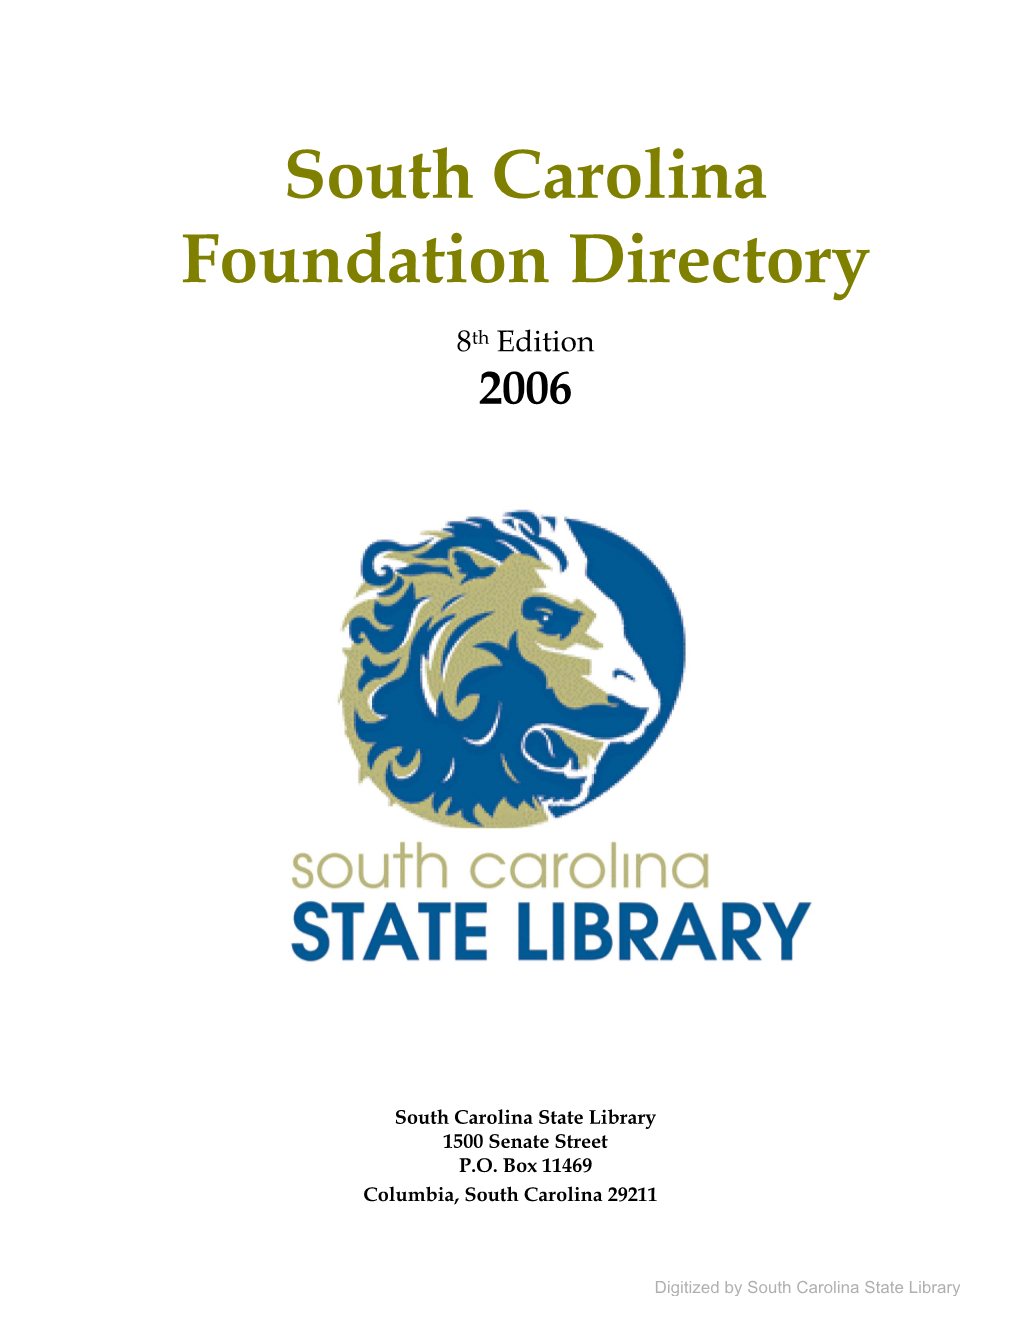 South Carolina Foundation Directory